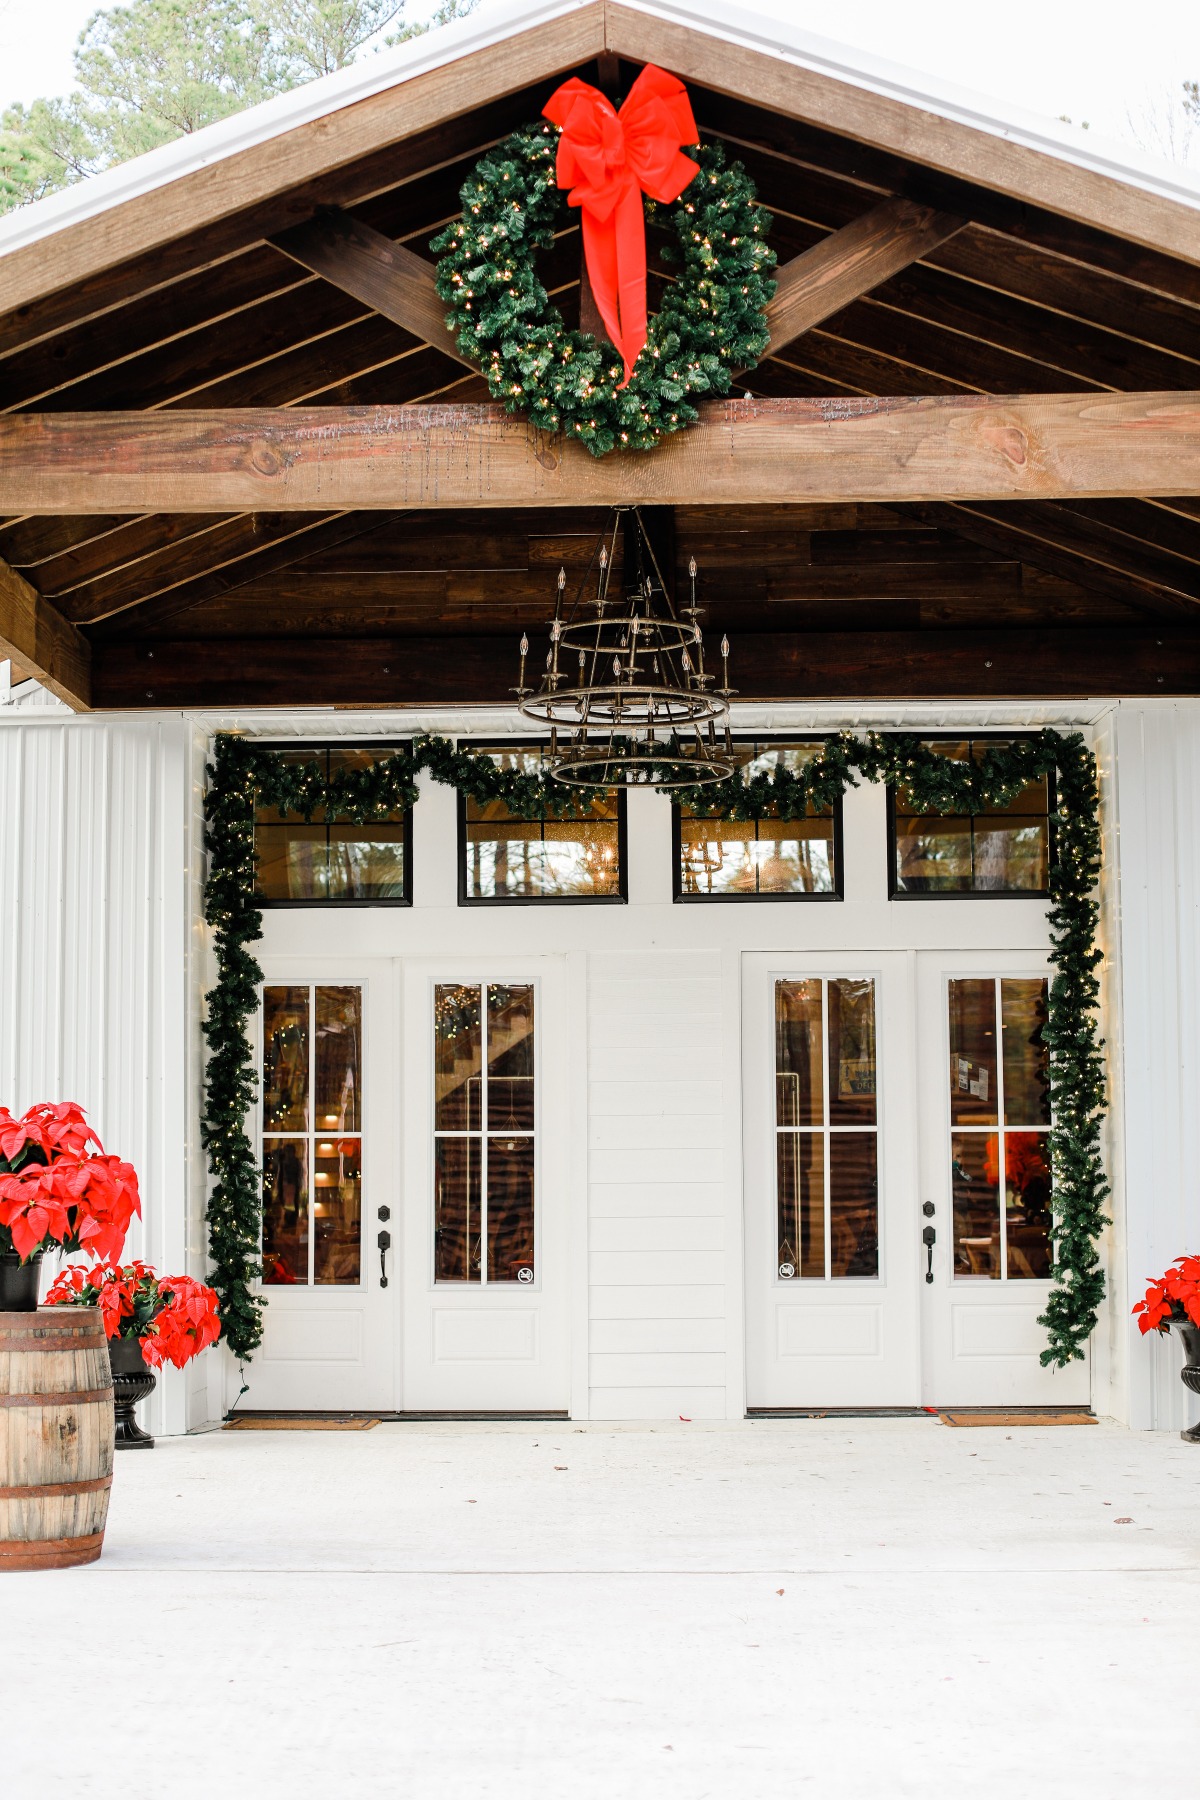 Winter Wonderland Wedding In A Remodeled Barn